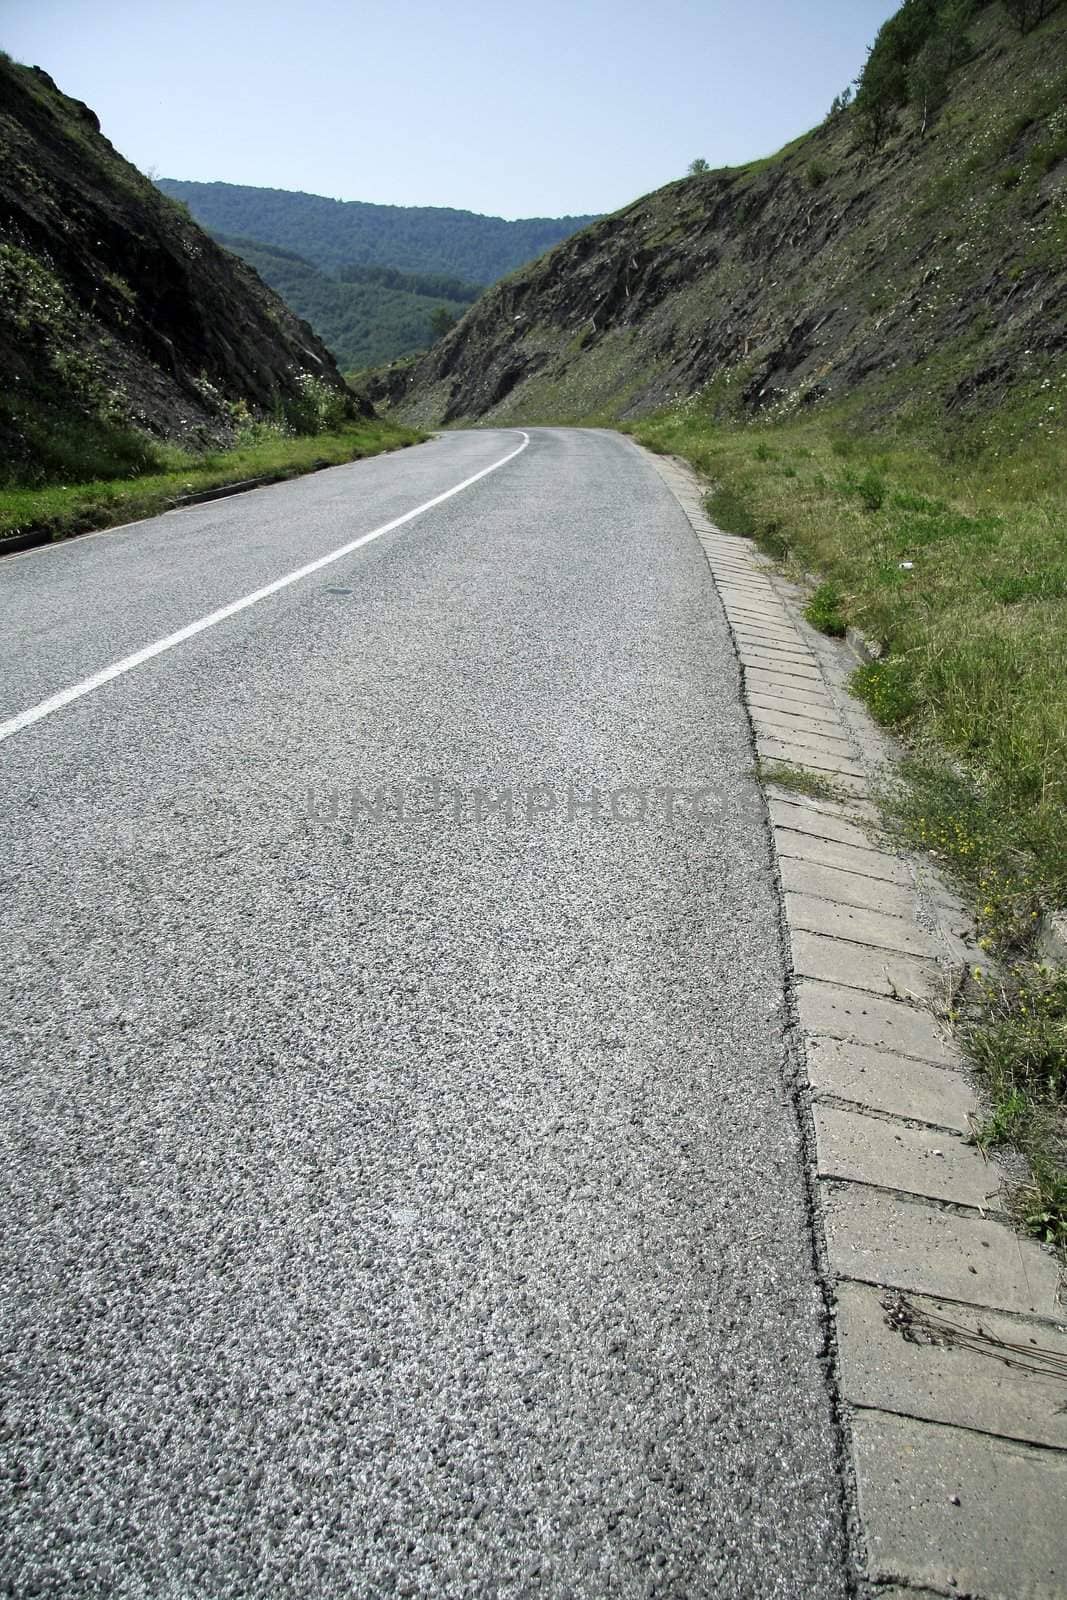 empty road between two hills, left curve in distance